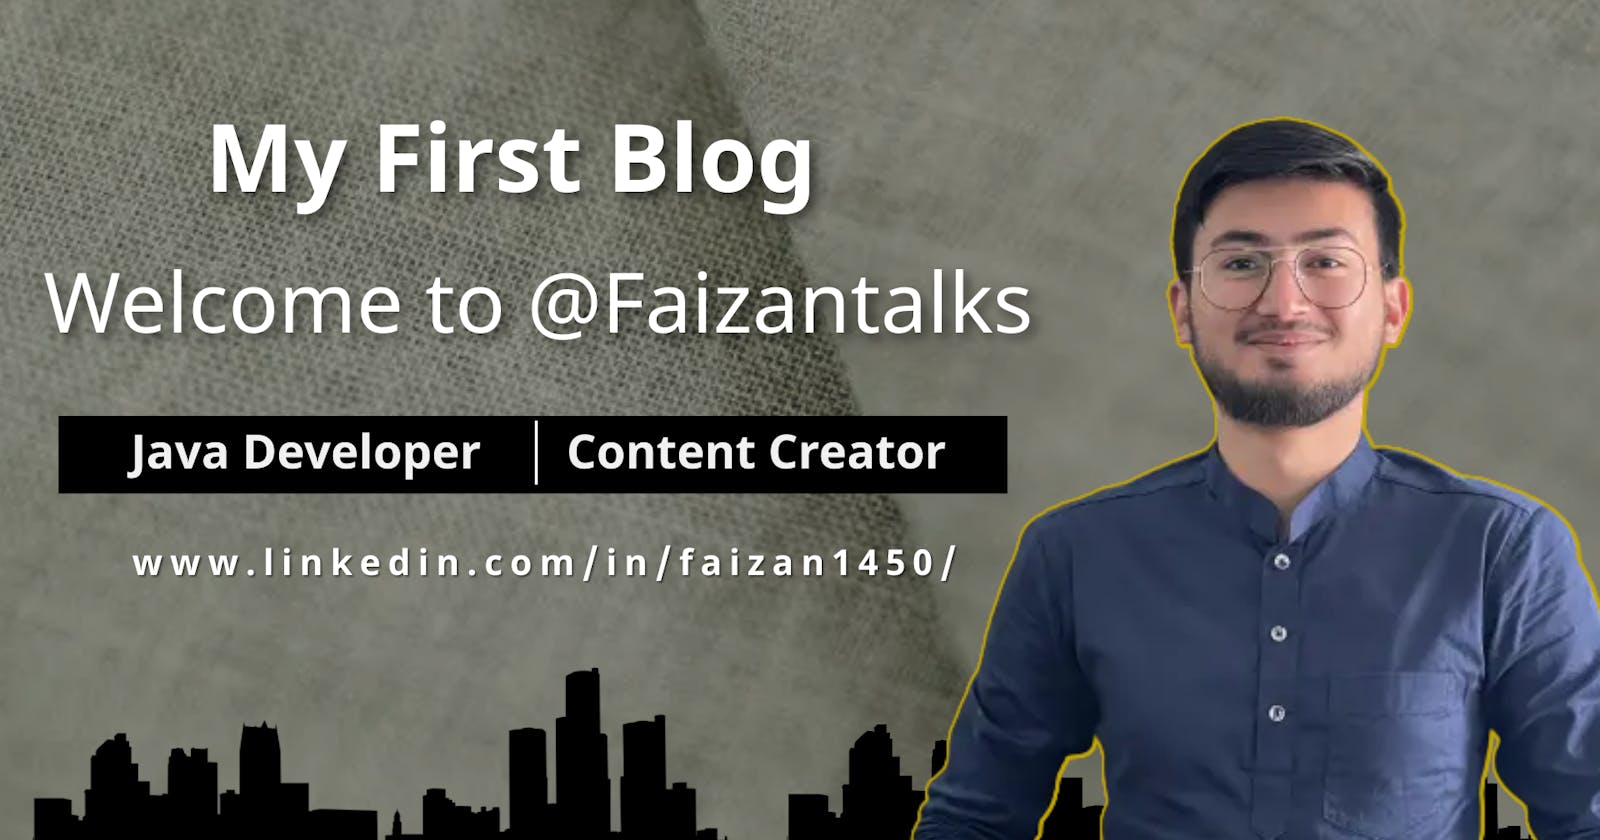 My First Blog: Welcome to Faizantalks